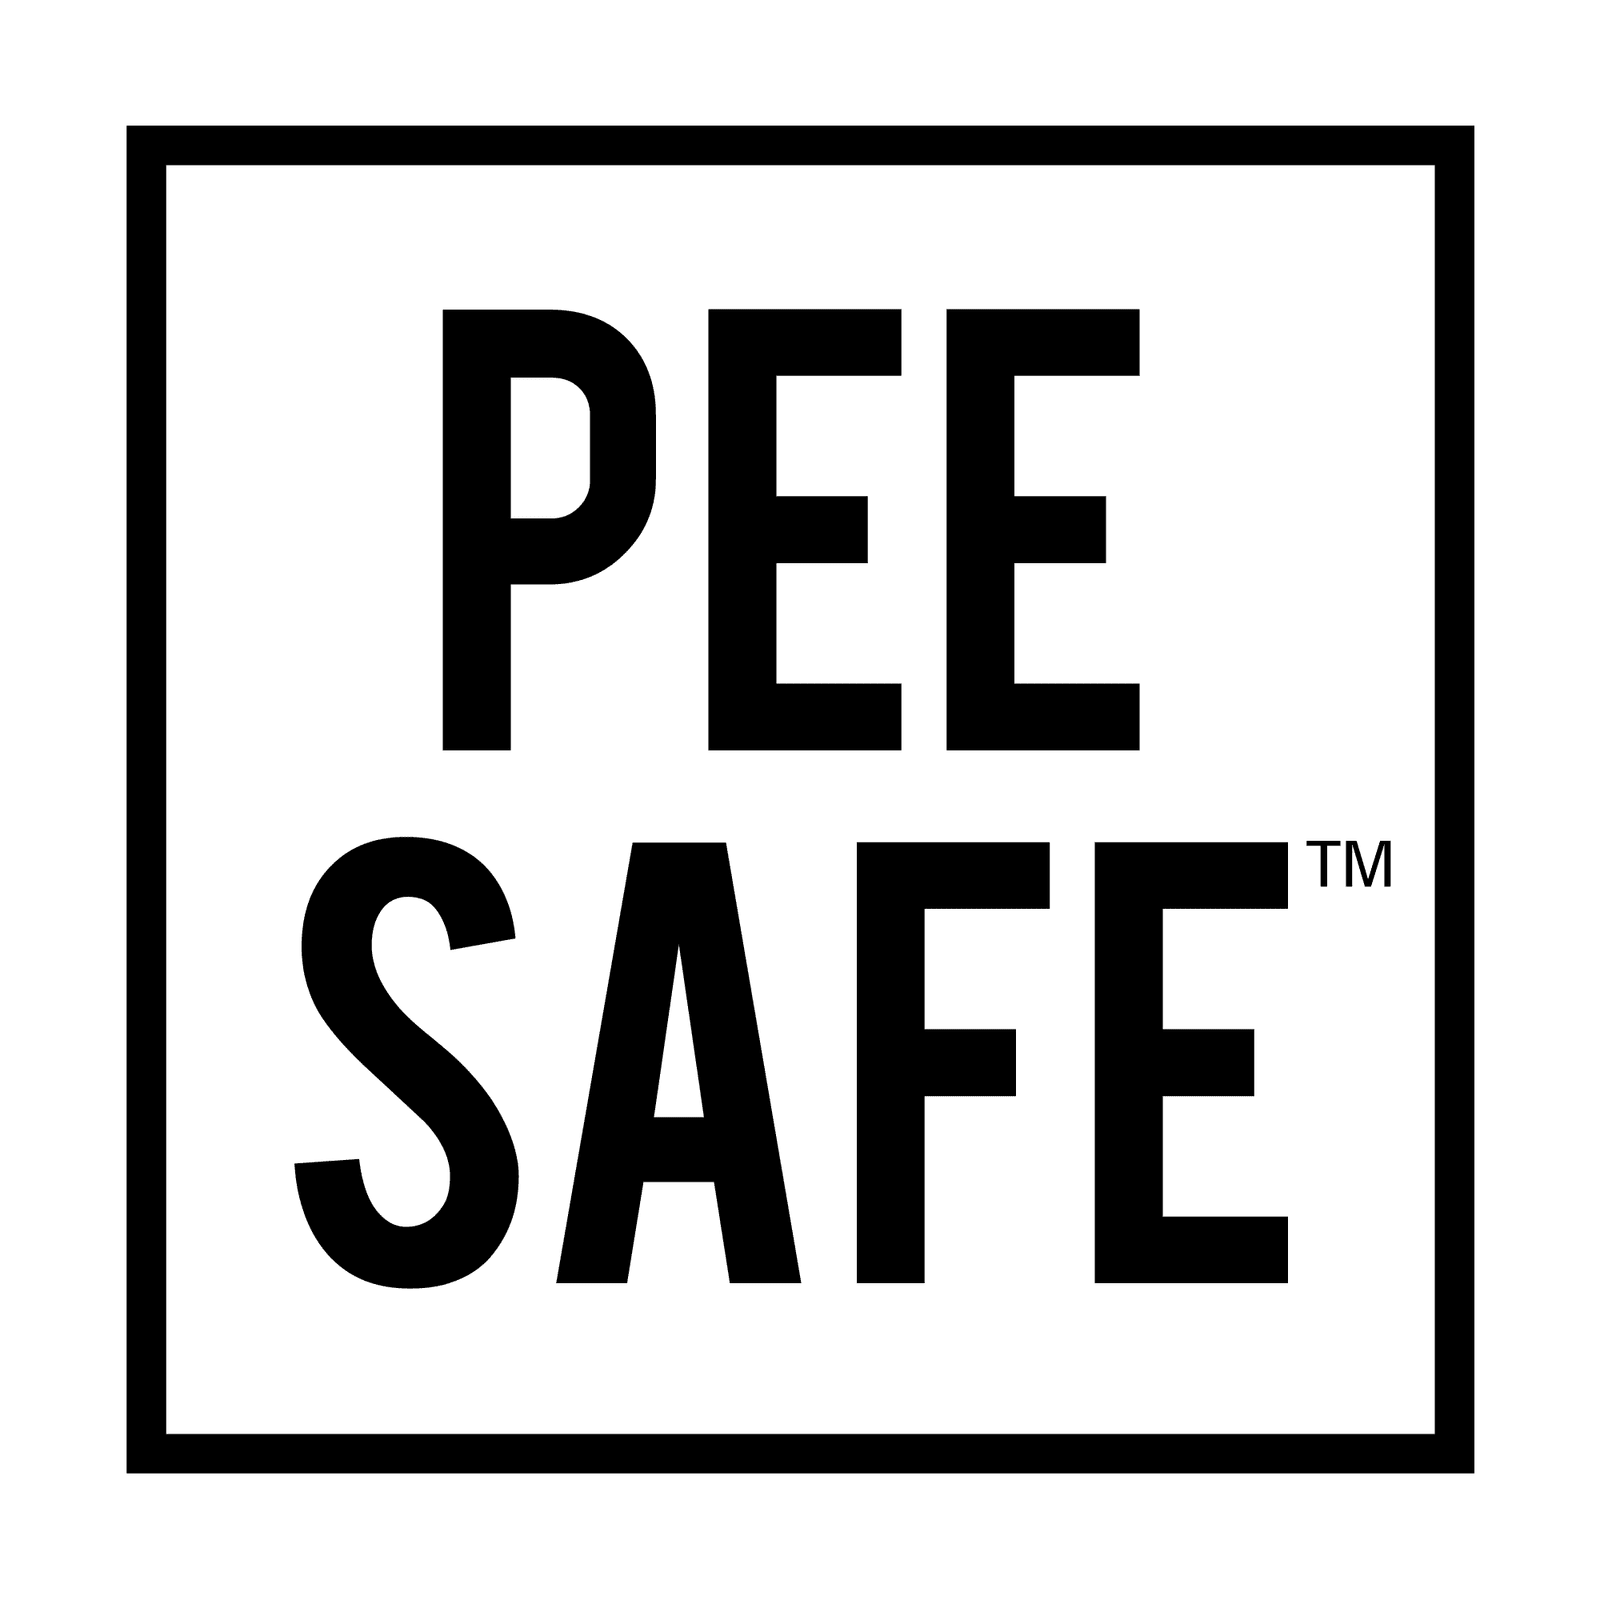 pee safe logo